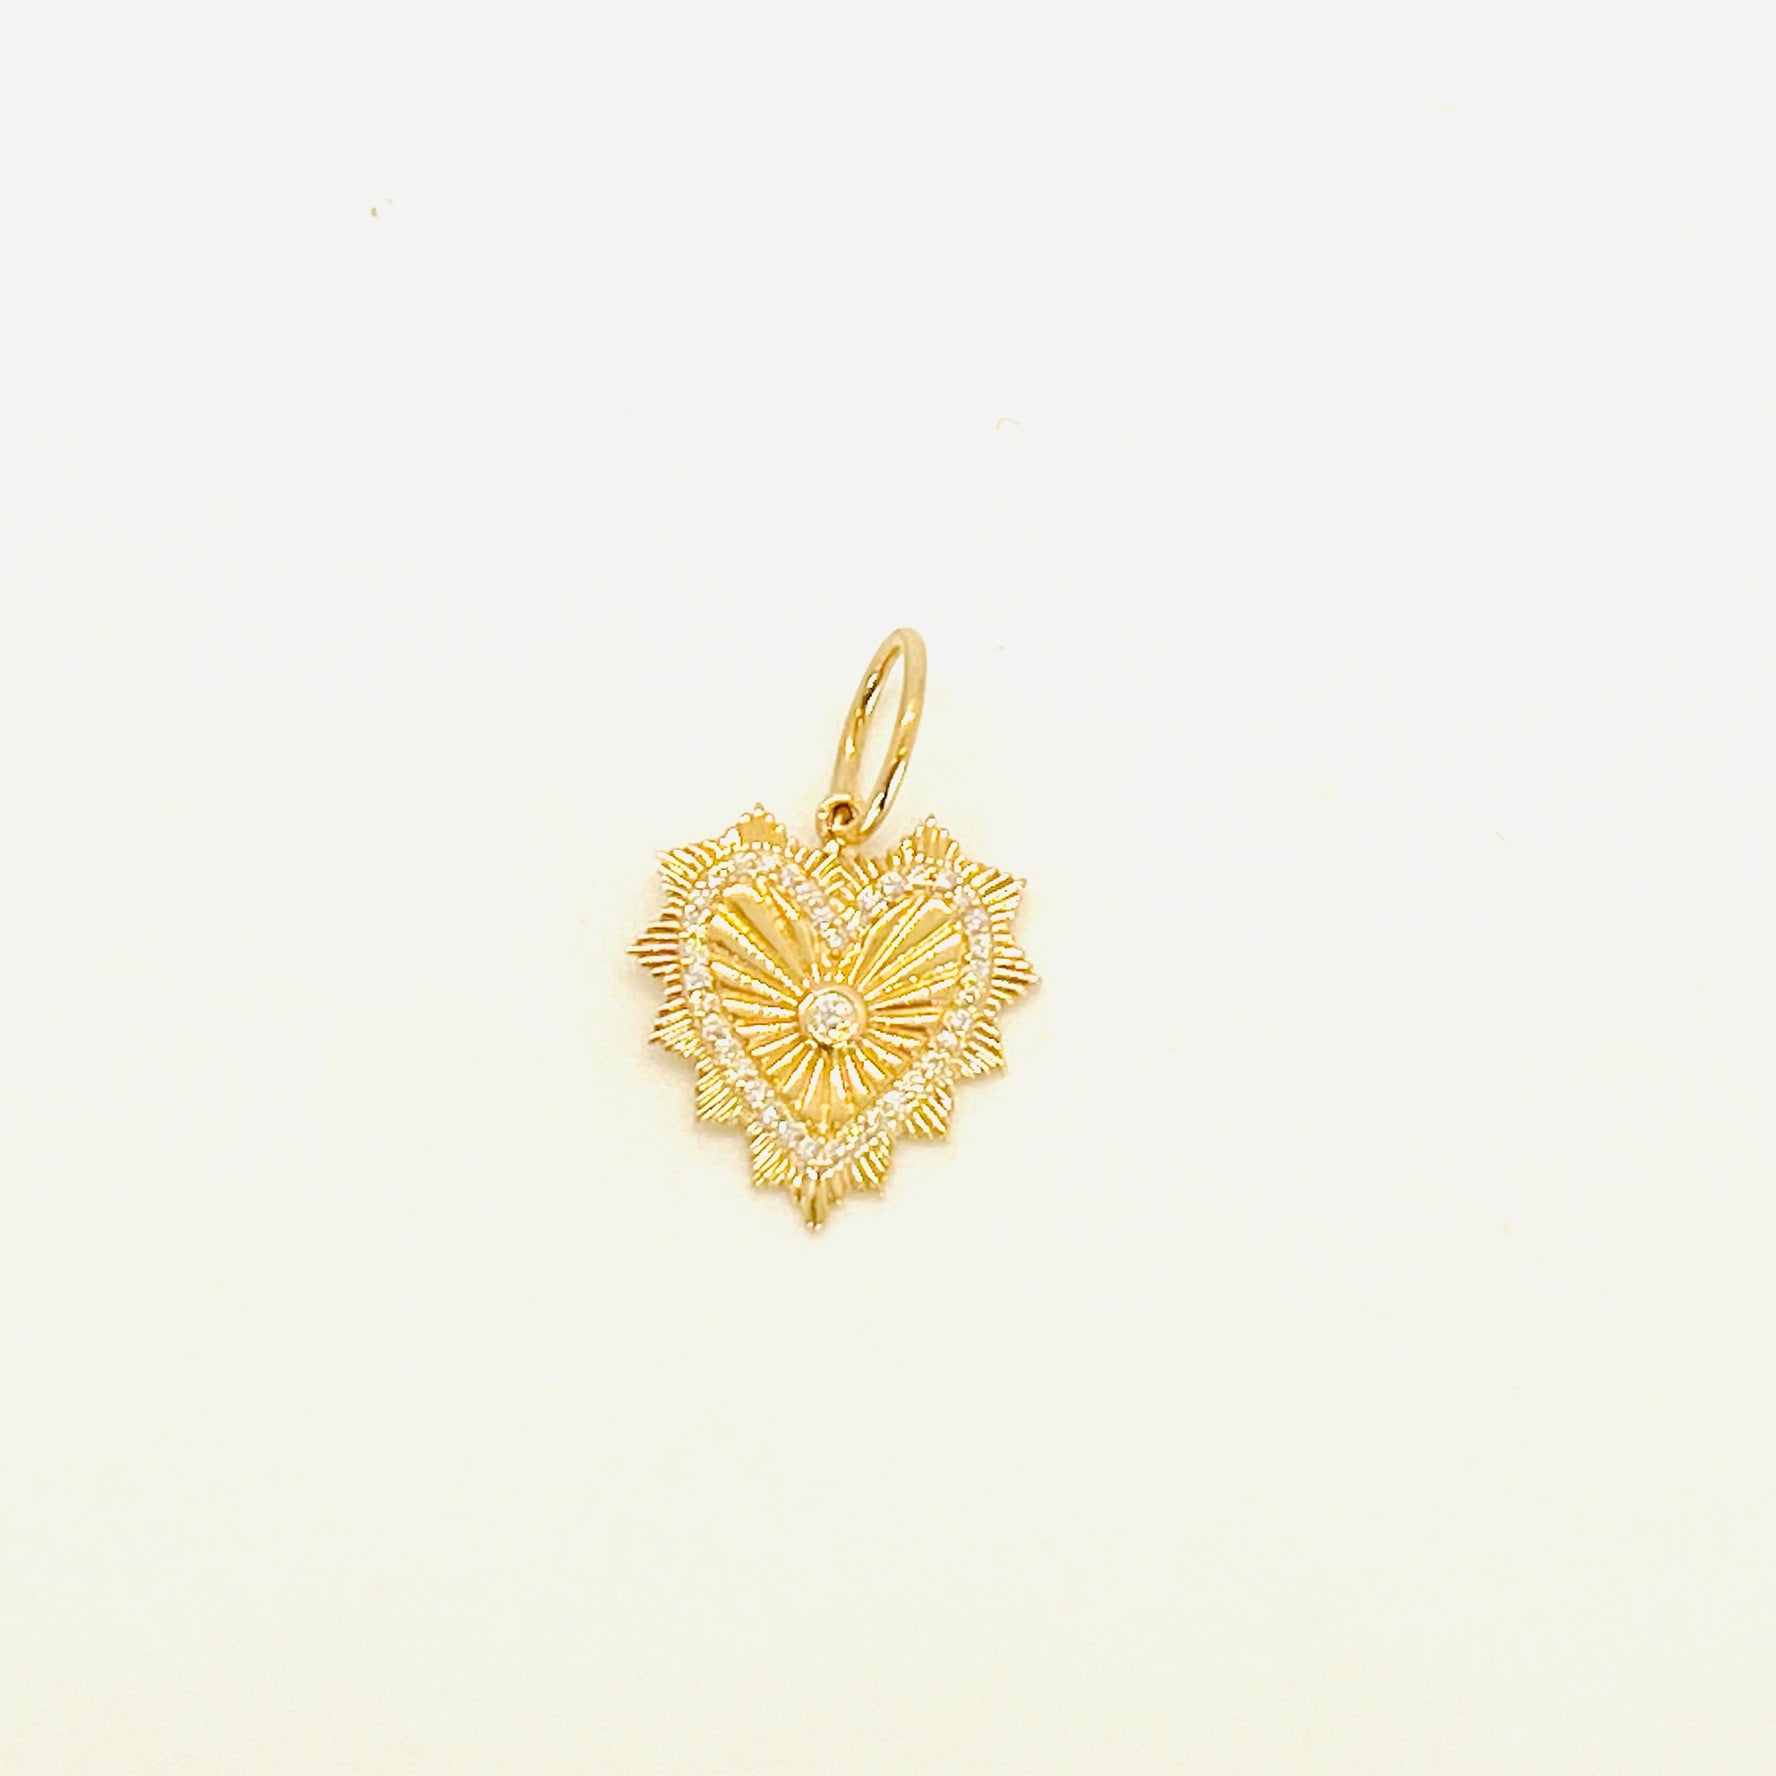 14k gold heart charm